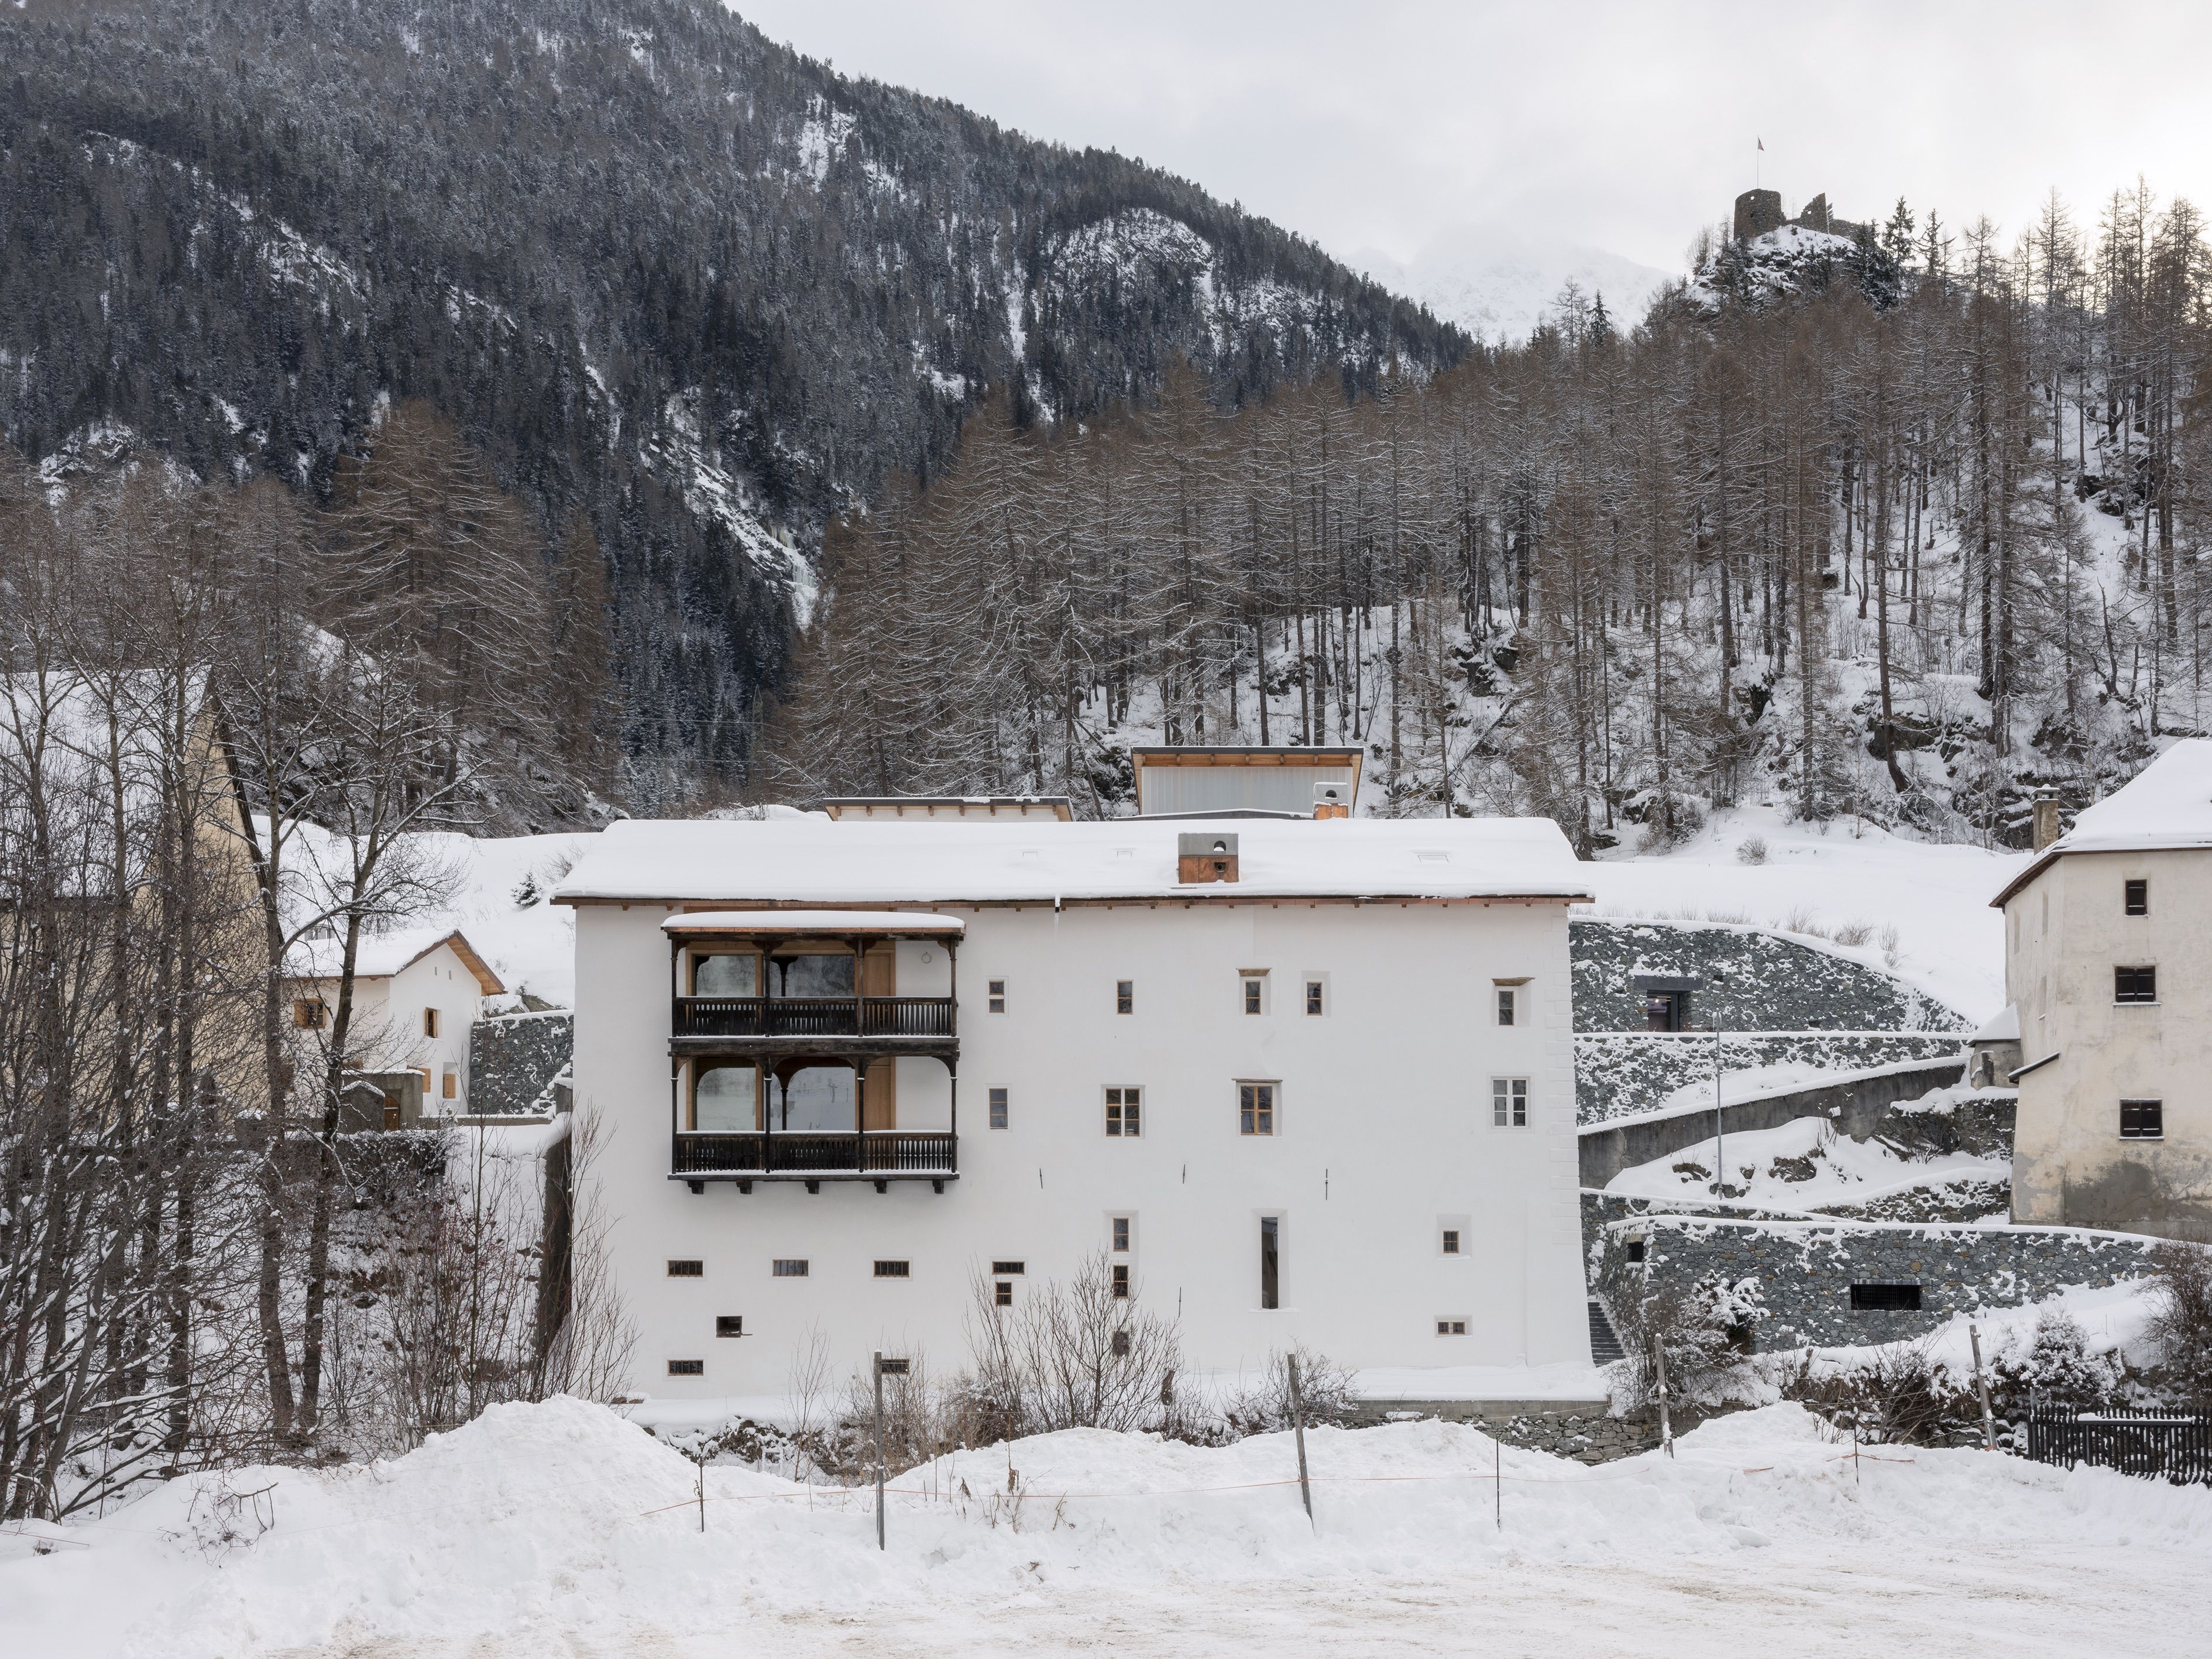 St. Moritz Buzzing with Art, Fashion, Food Projects – WWD